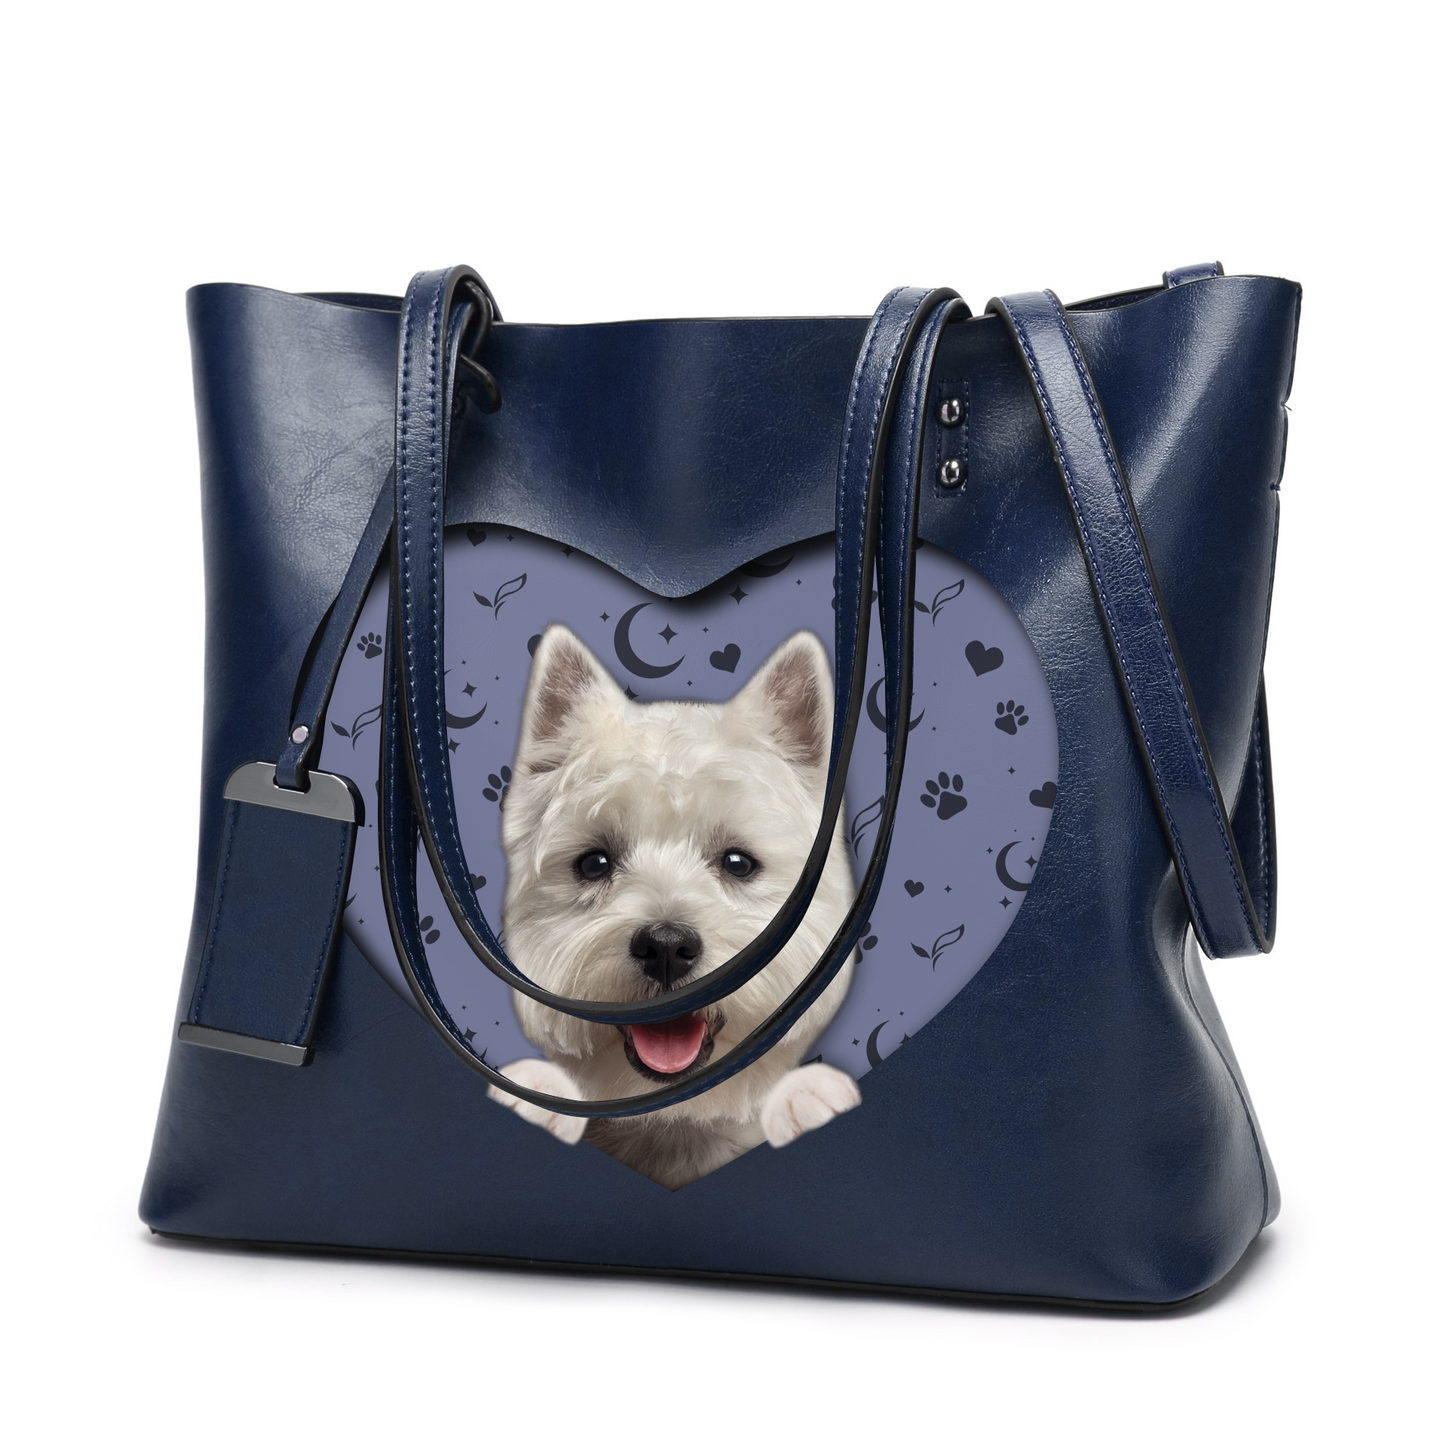 I Know I'm Cute - West Highland White Terrier Glamour Handbag V1 - 11